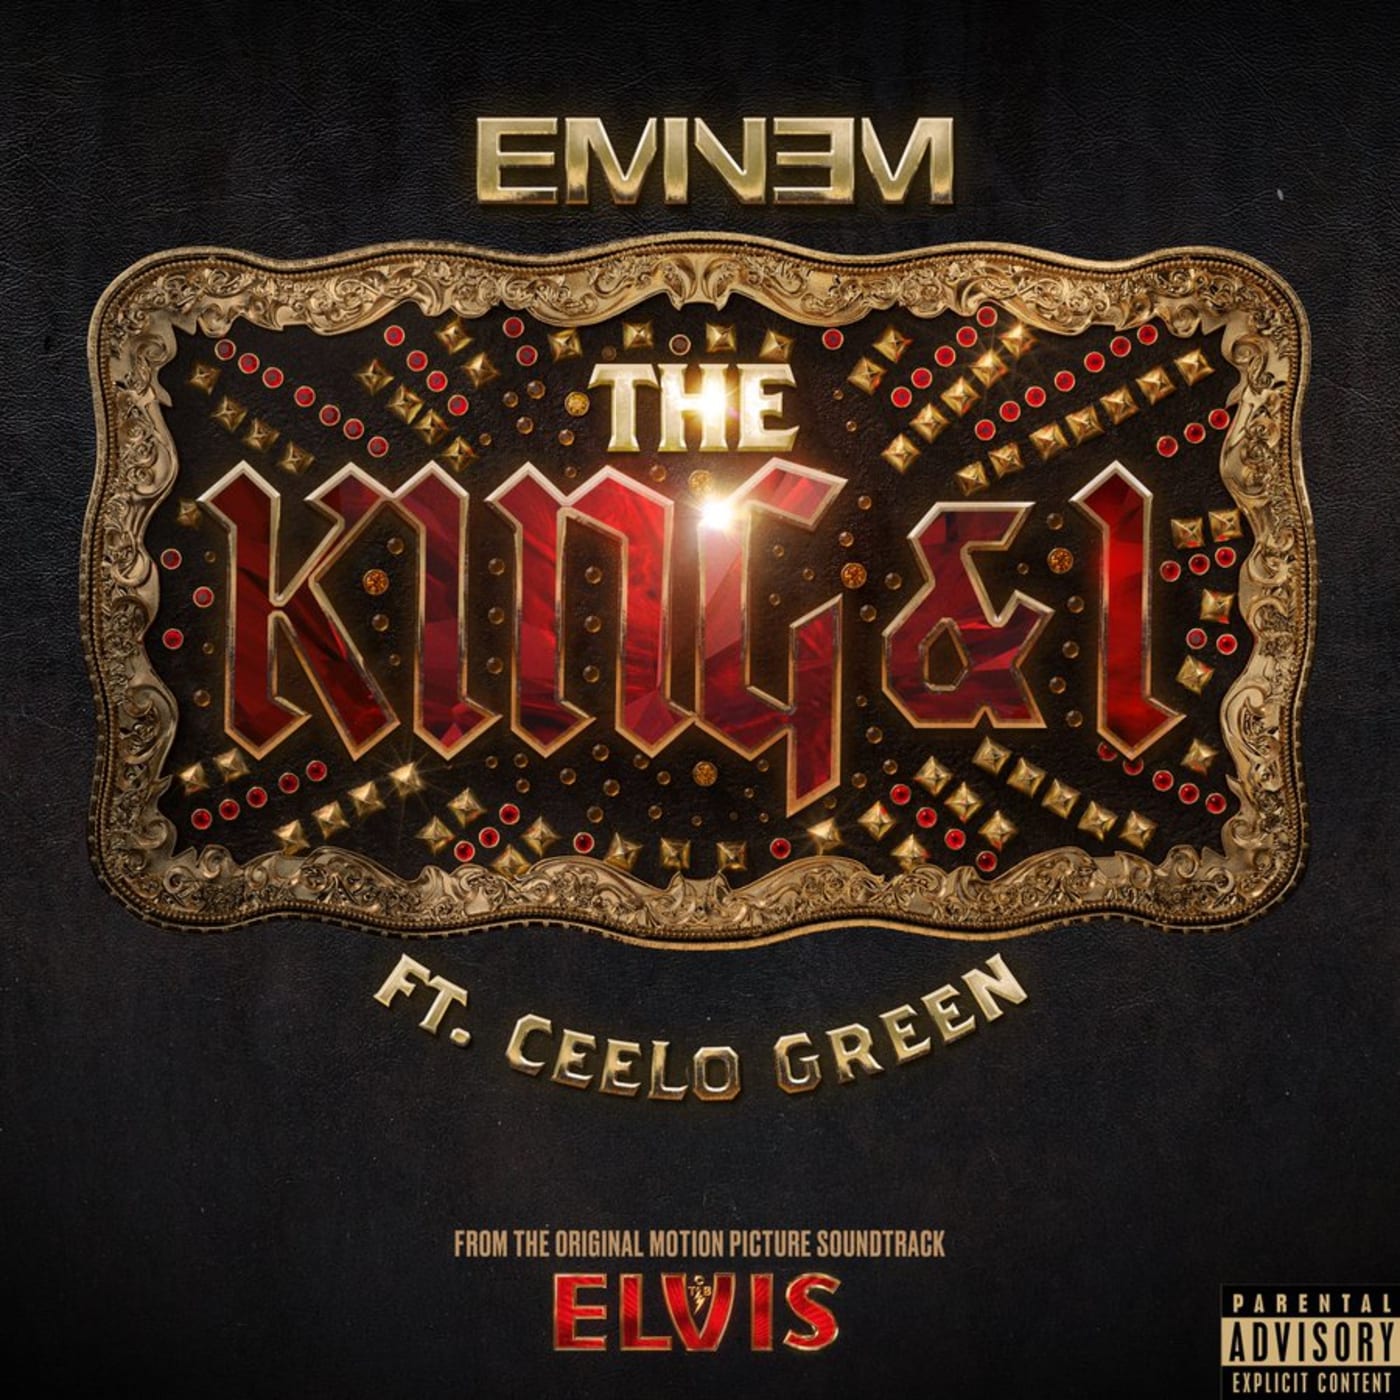 Eminem and CeeLo's single cover art